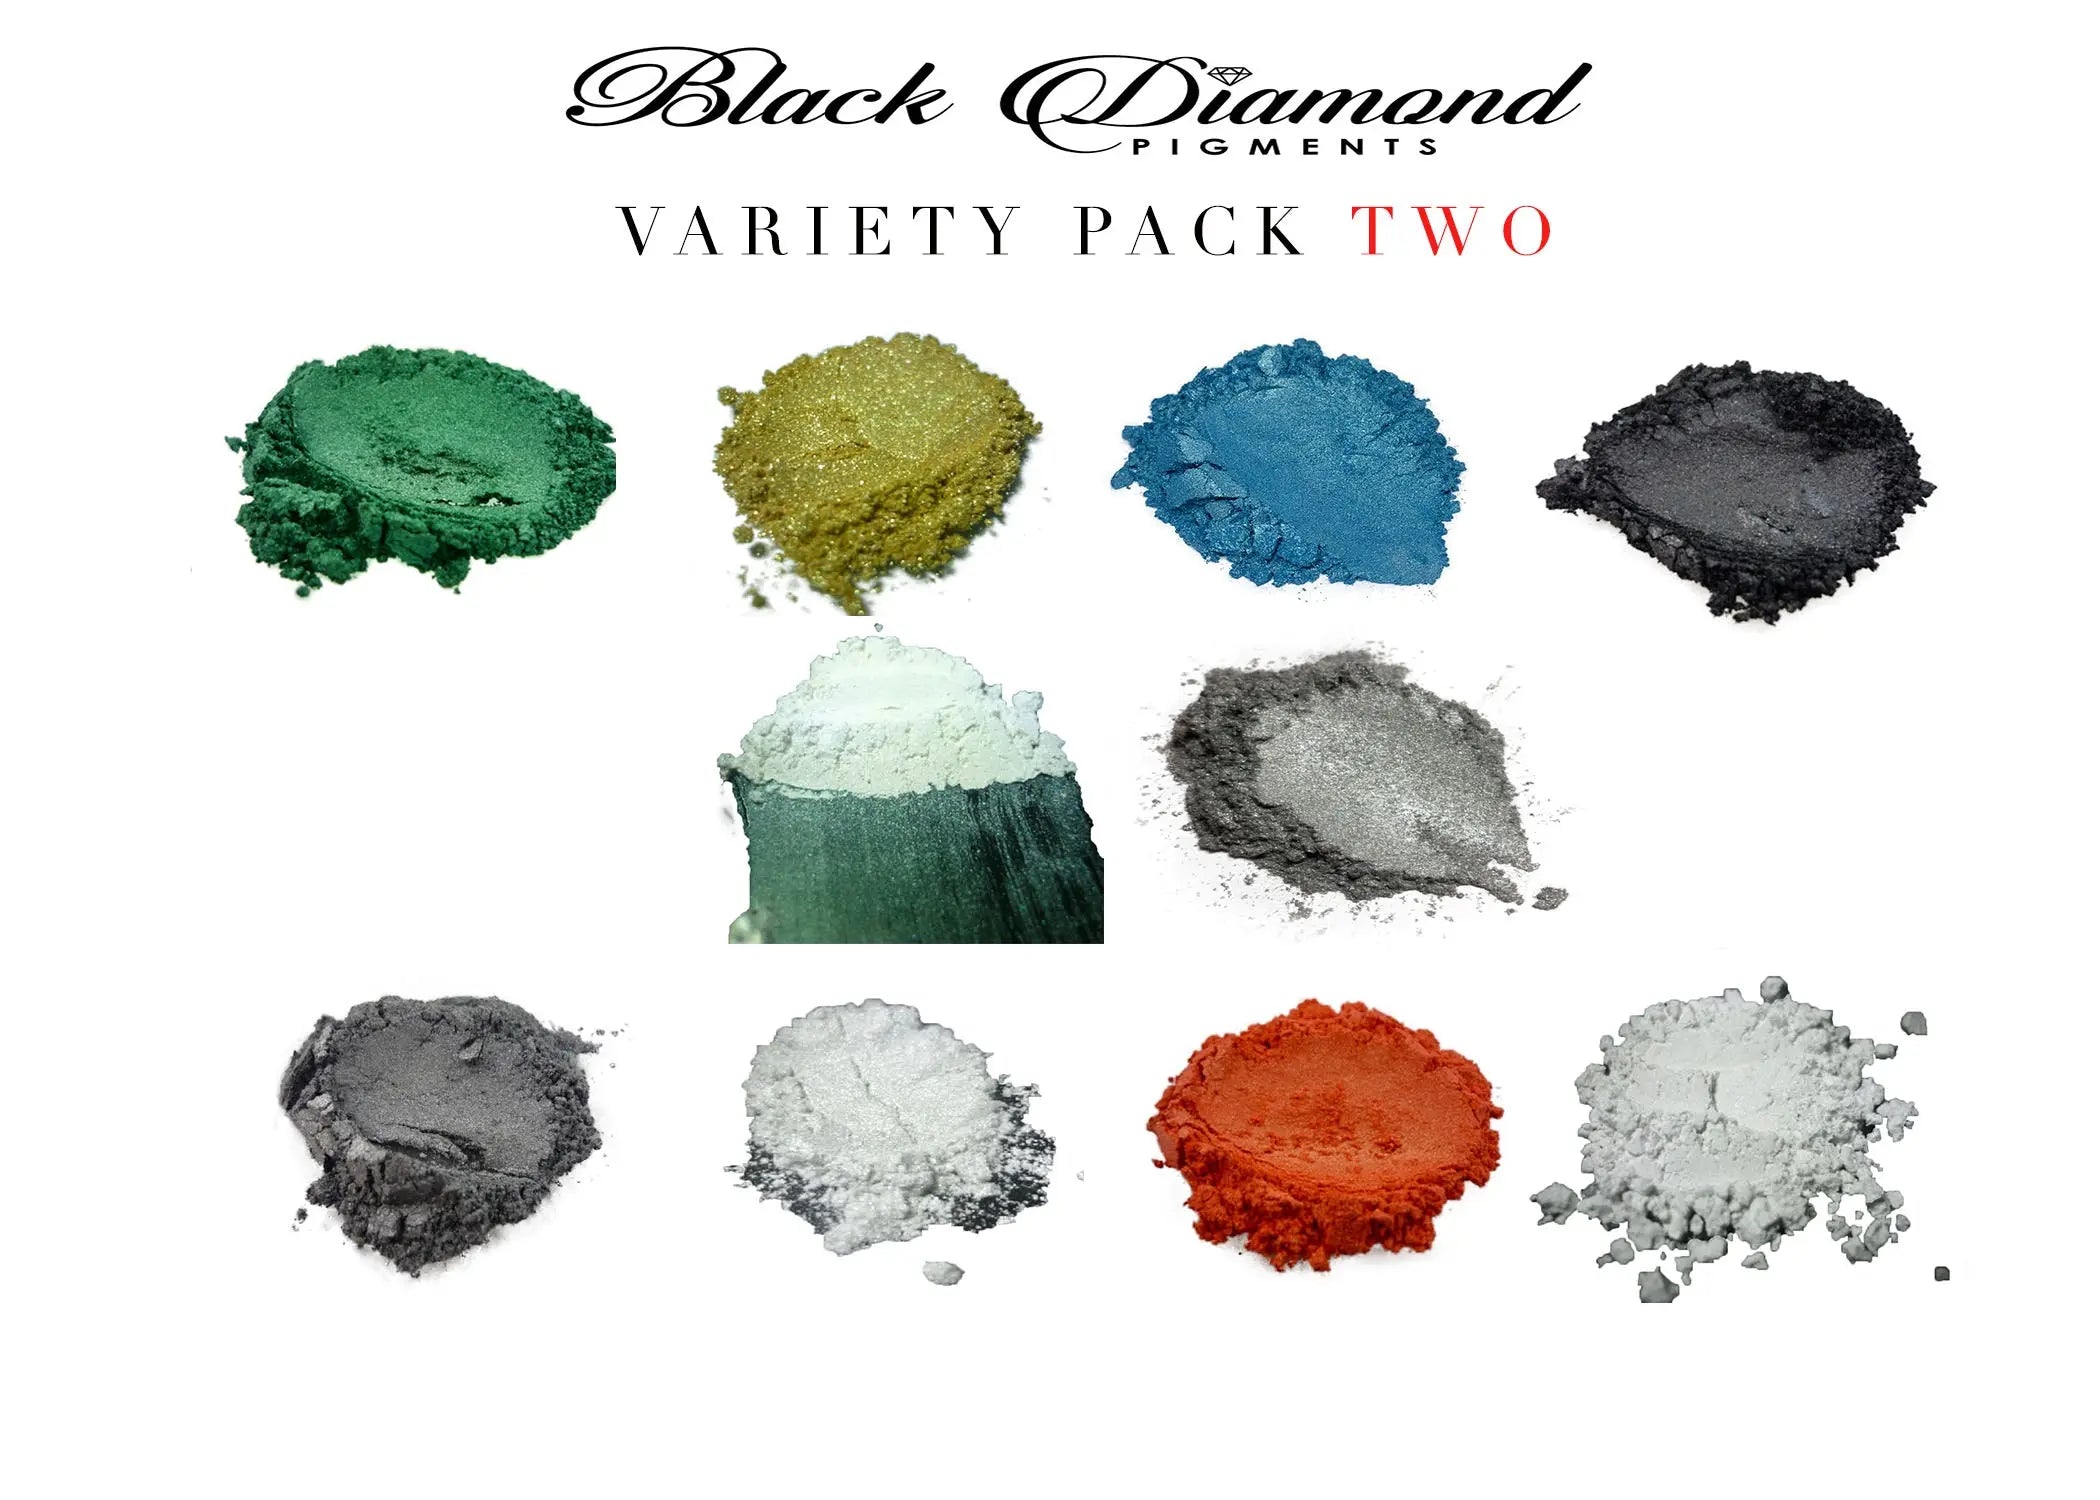 VARIETY PACK 1 (10 COLORS) powder pigment packs Black Diamond Pigments